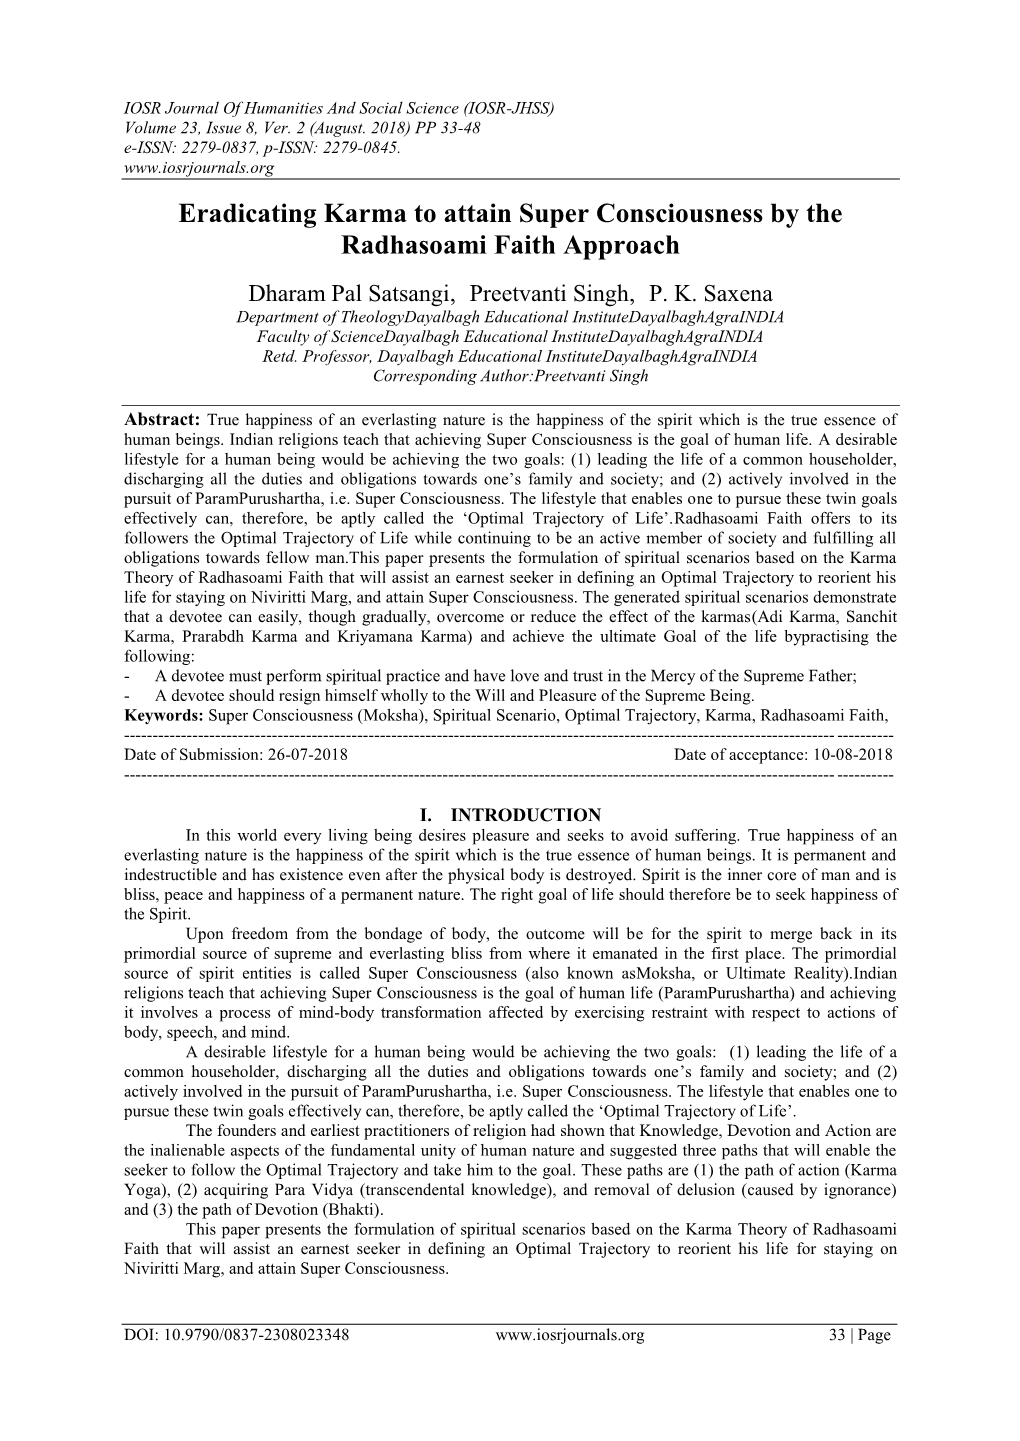 Eradicating Karma to Attain Super Consciousness by the Radhasoami Faith Approach